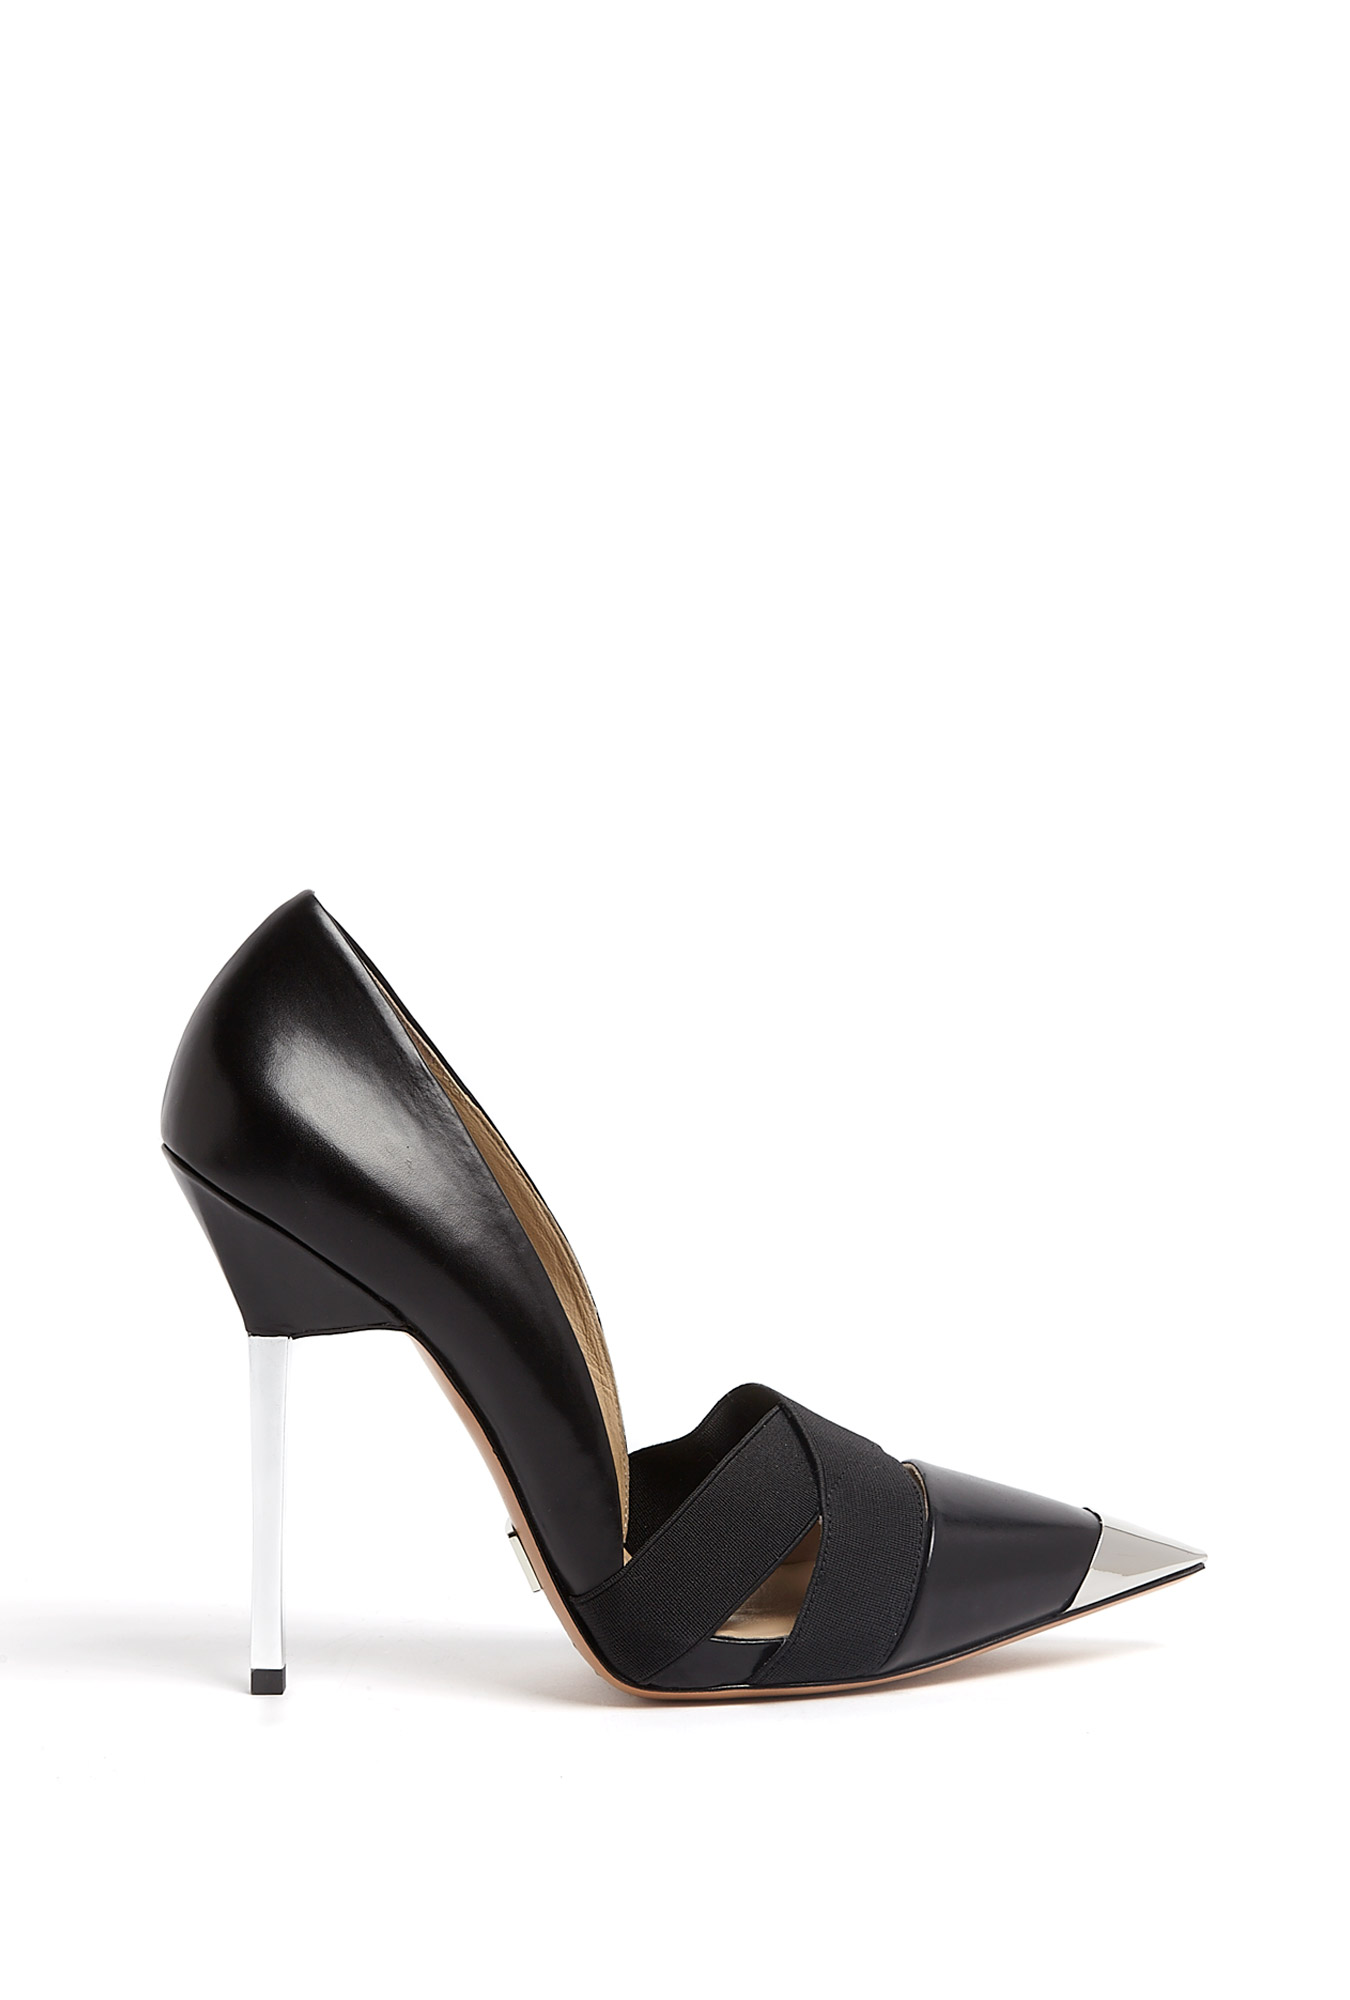 Michael Kors Black Ana Metal Toe Cap Stiletto Court Shoes in Black | Lyst